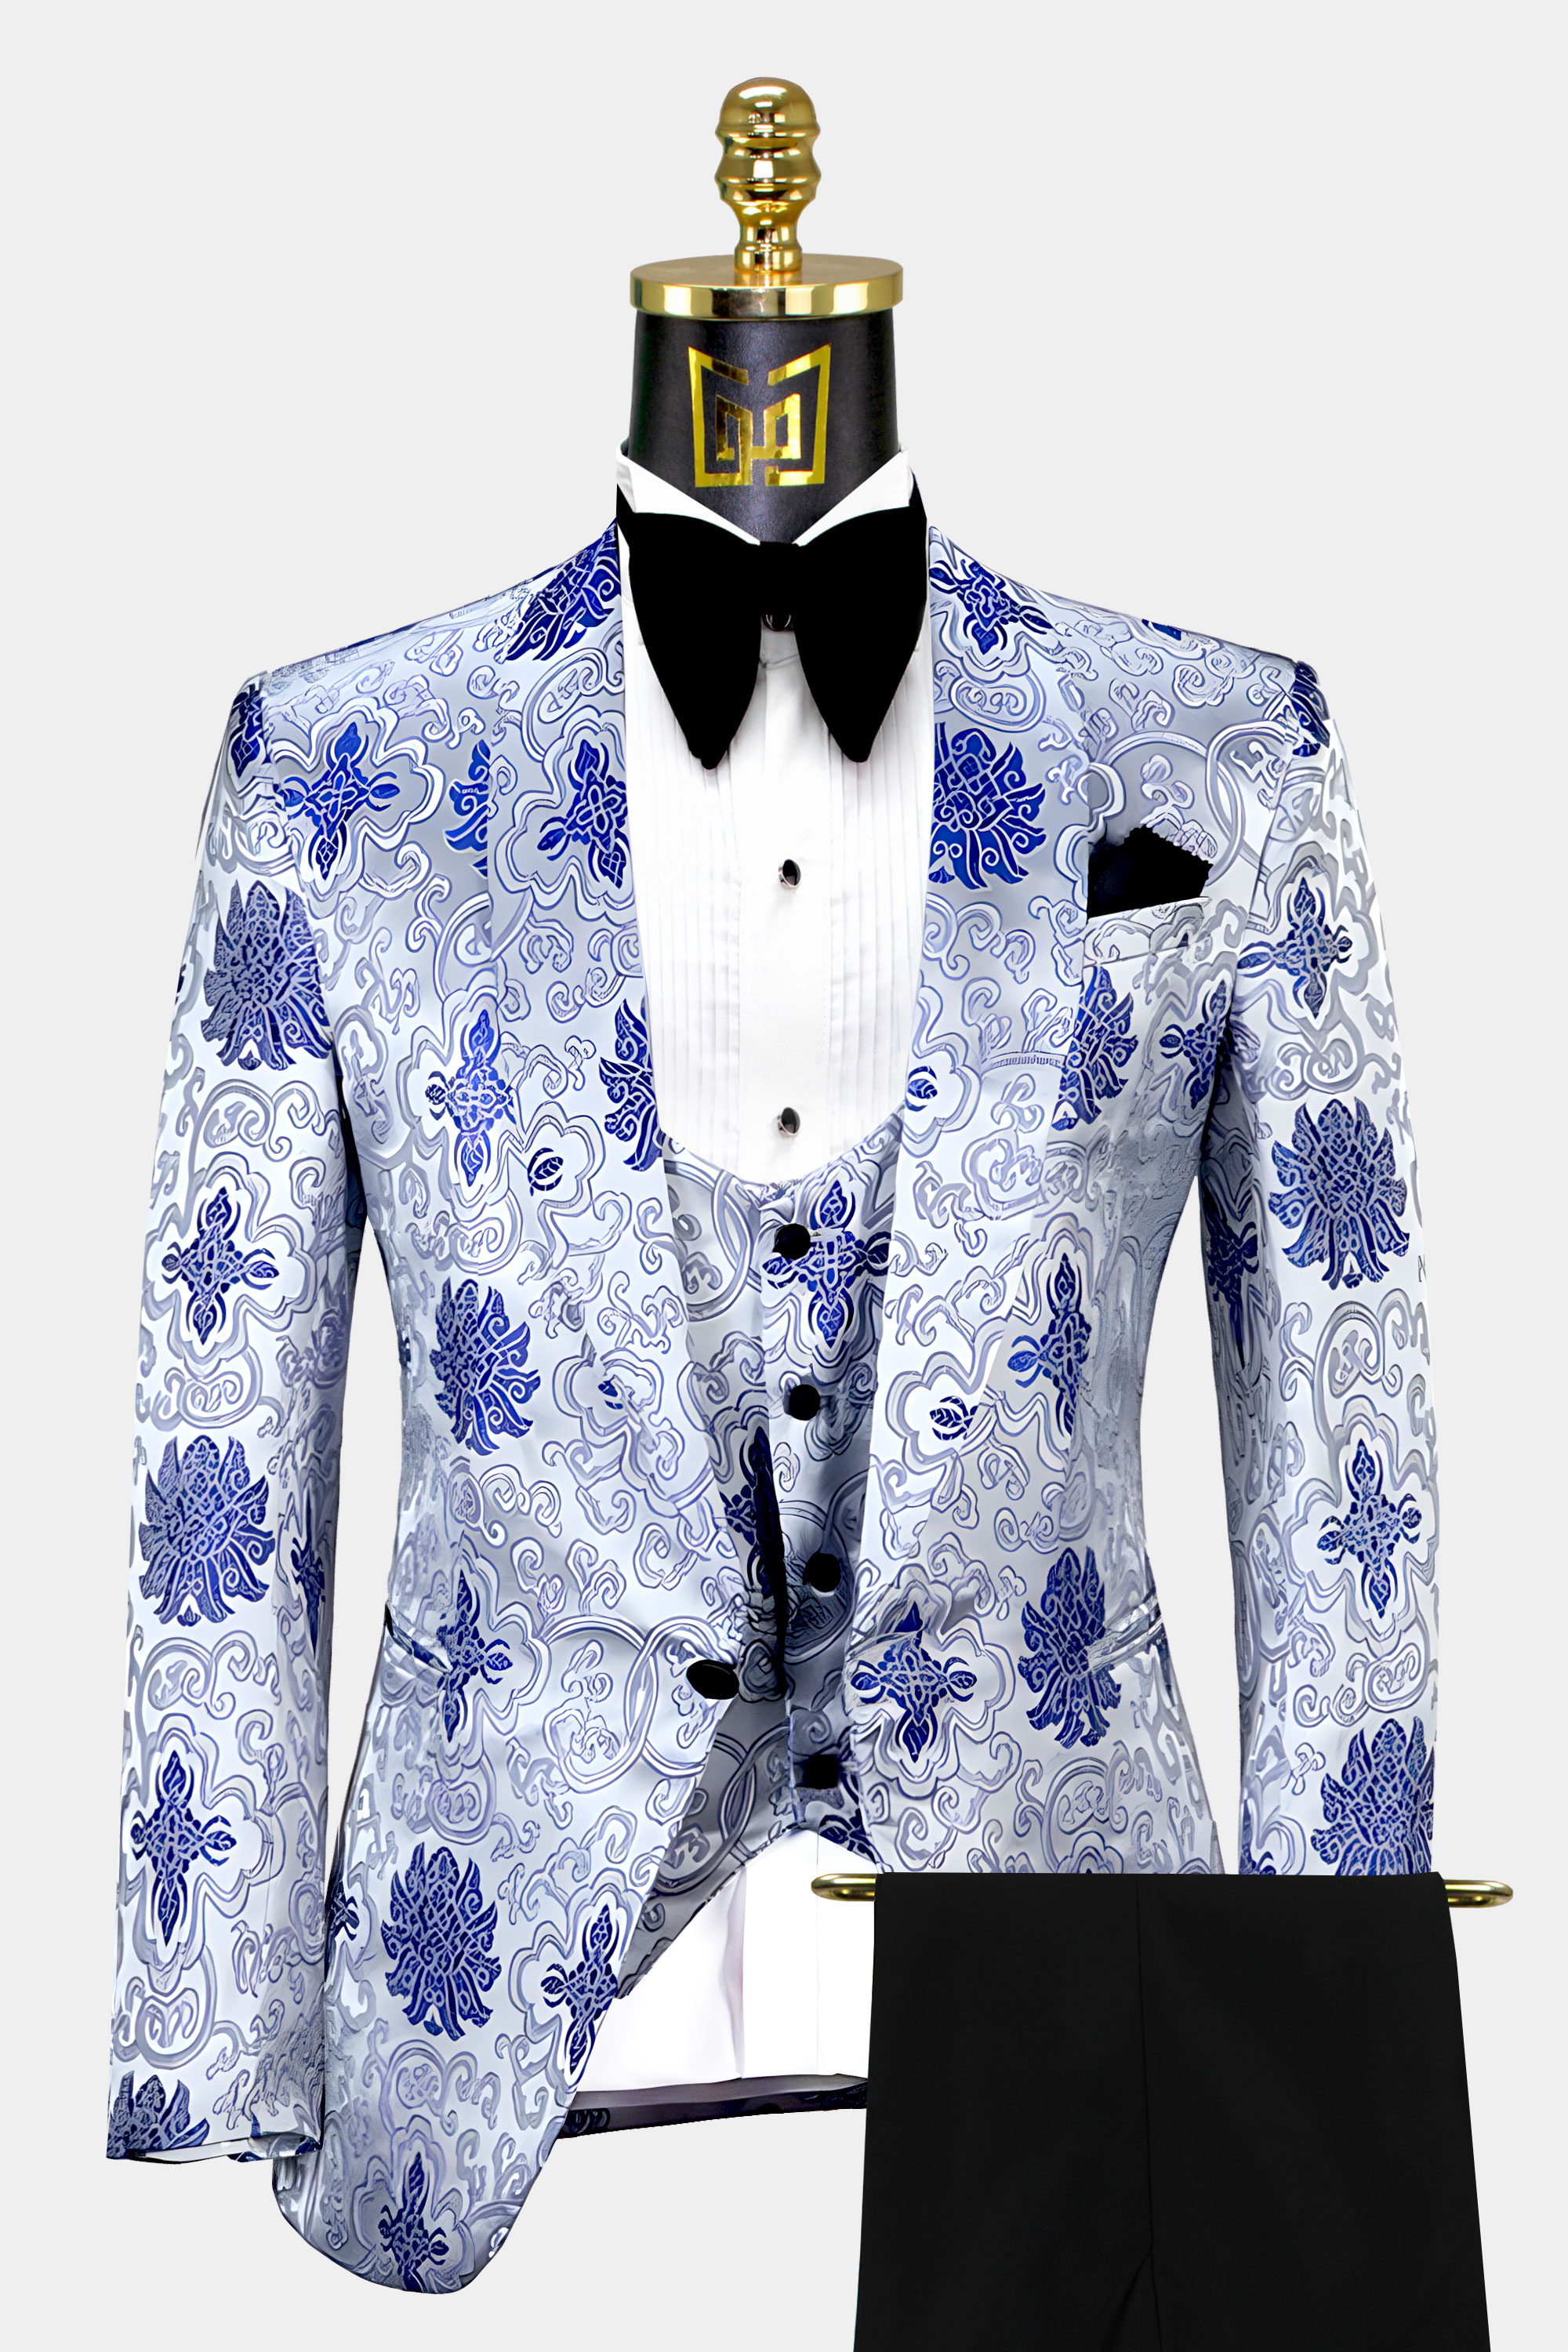 Silver-and-Royal-Blue-Silver-Tuxedo-Groom-Suit-from-Gentlemansguru.com